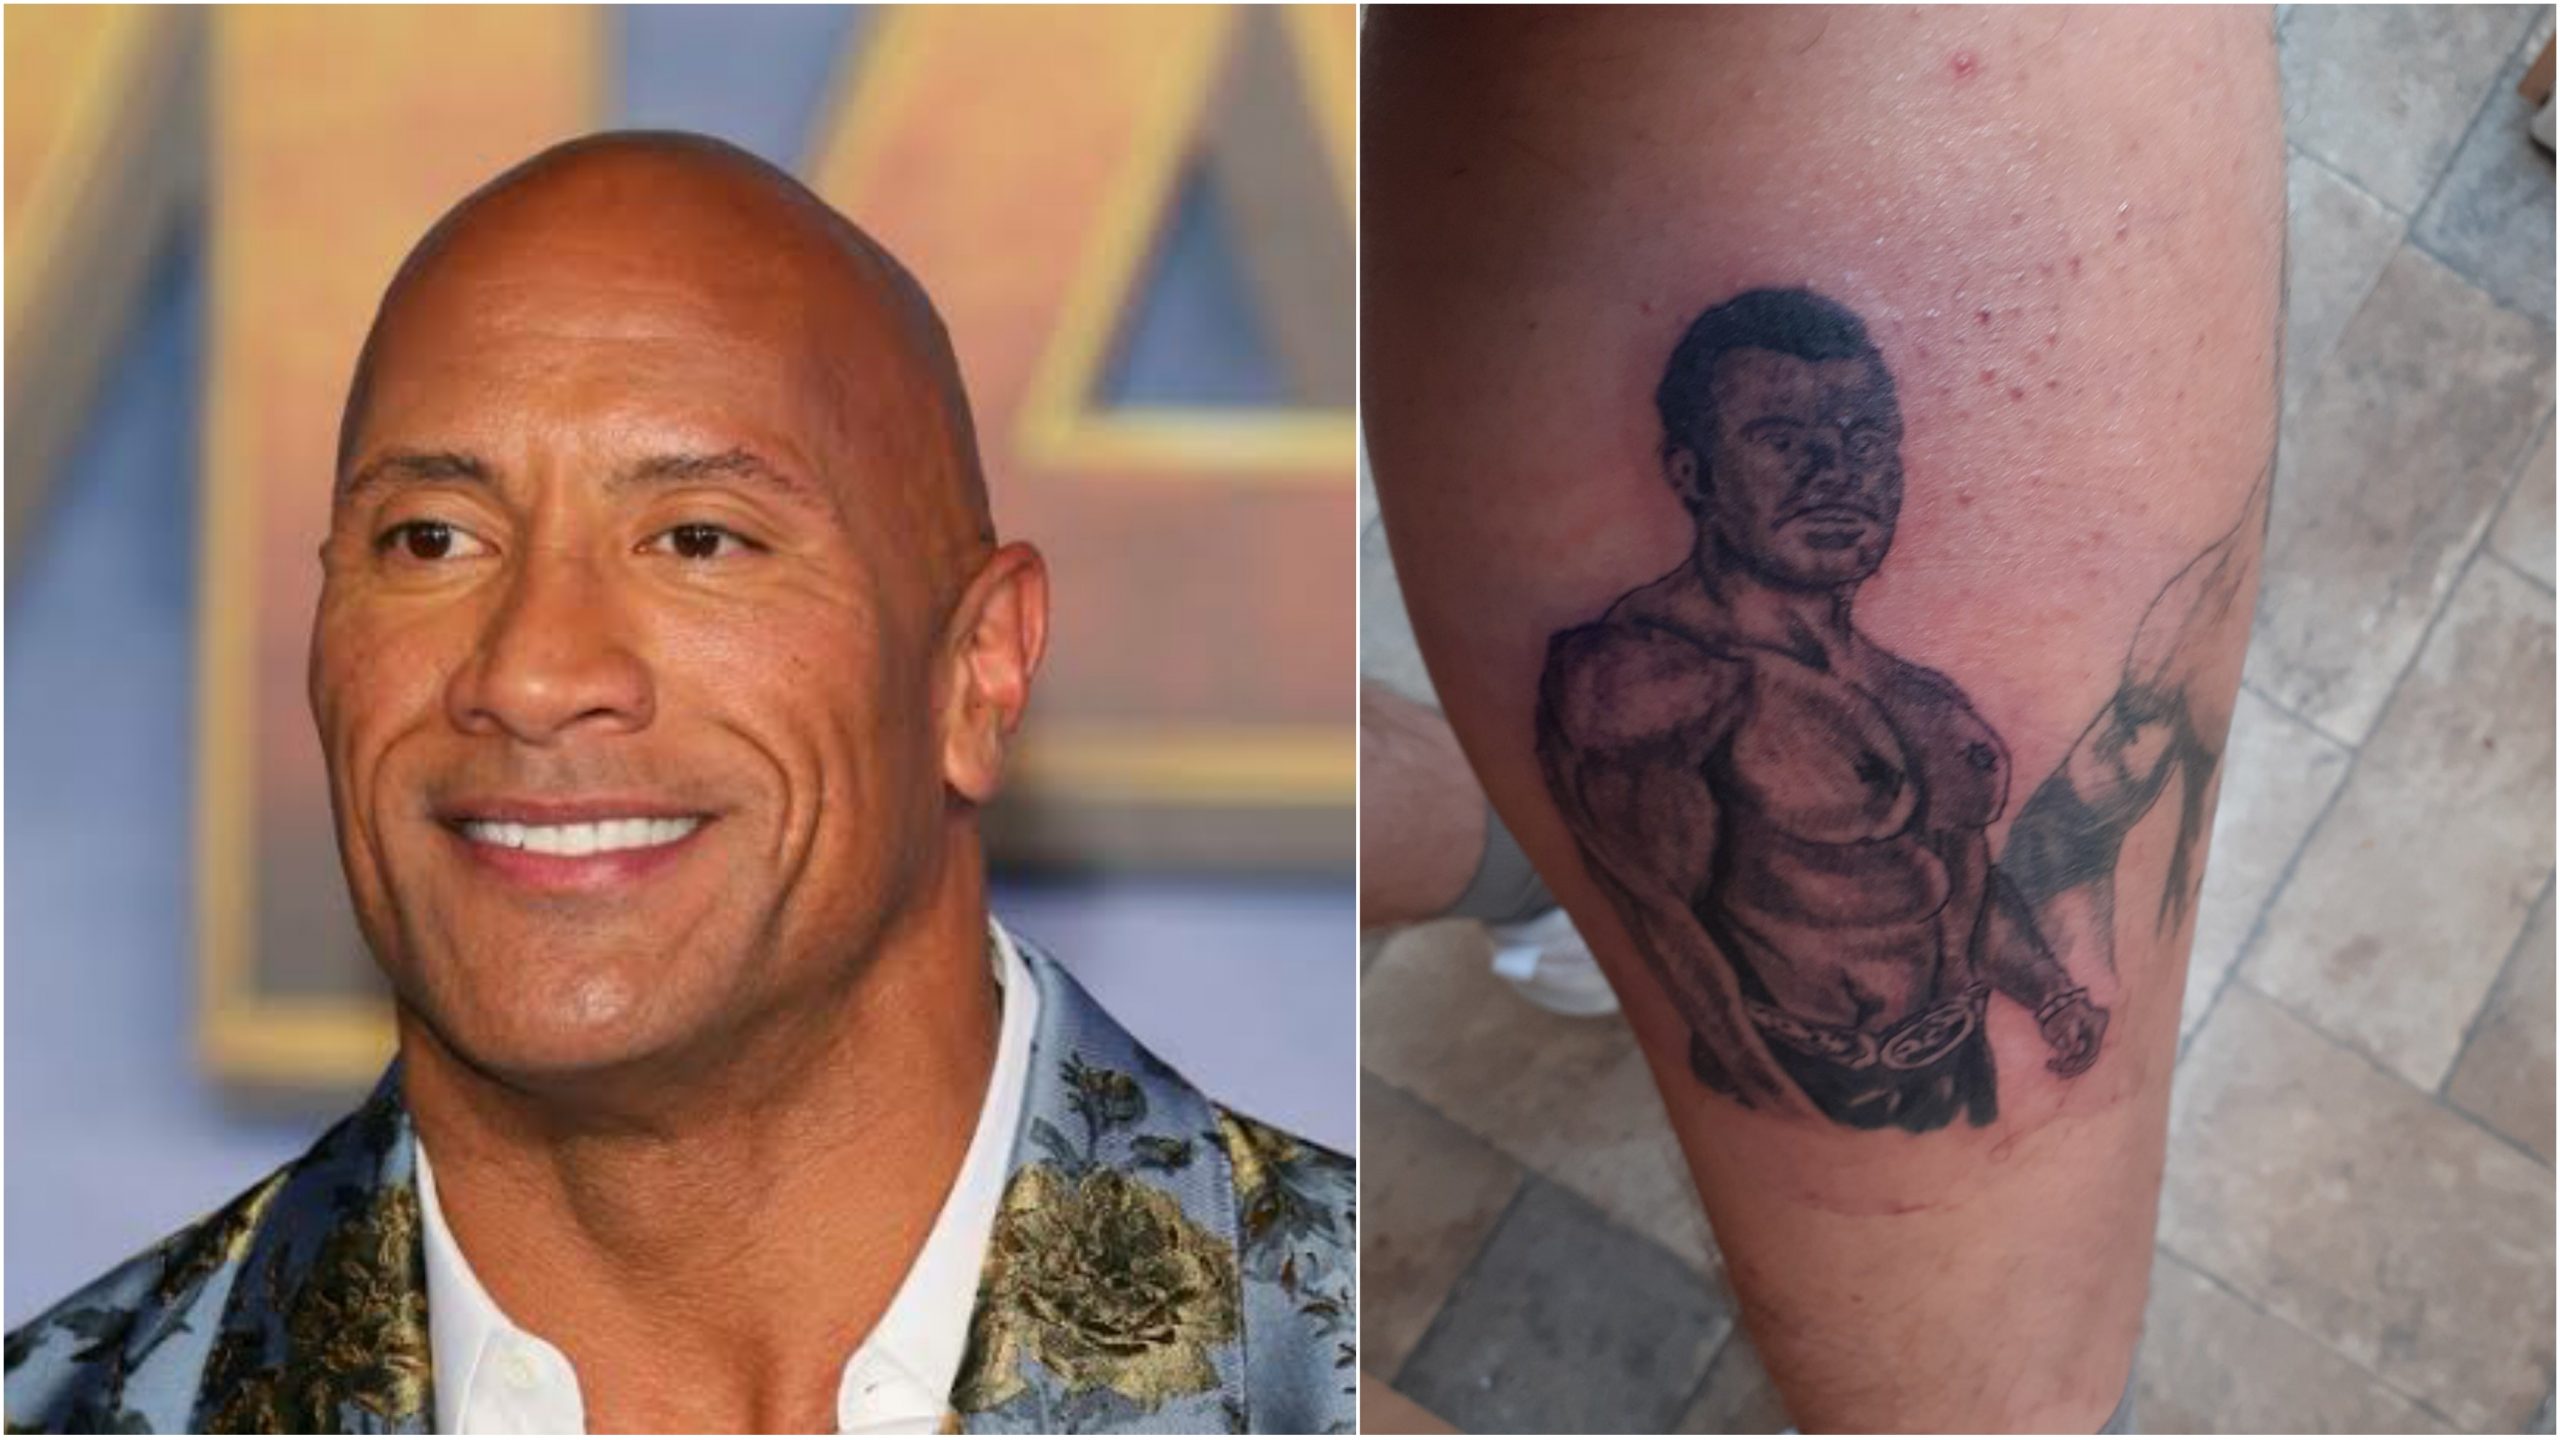 The Venezuelan artist behind The Rocks iconic tattoo